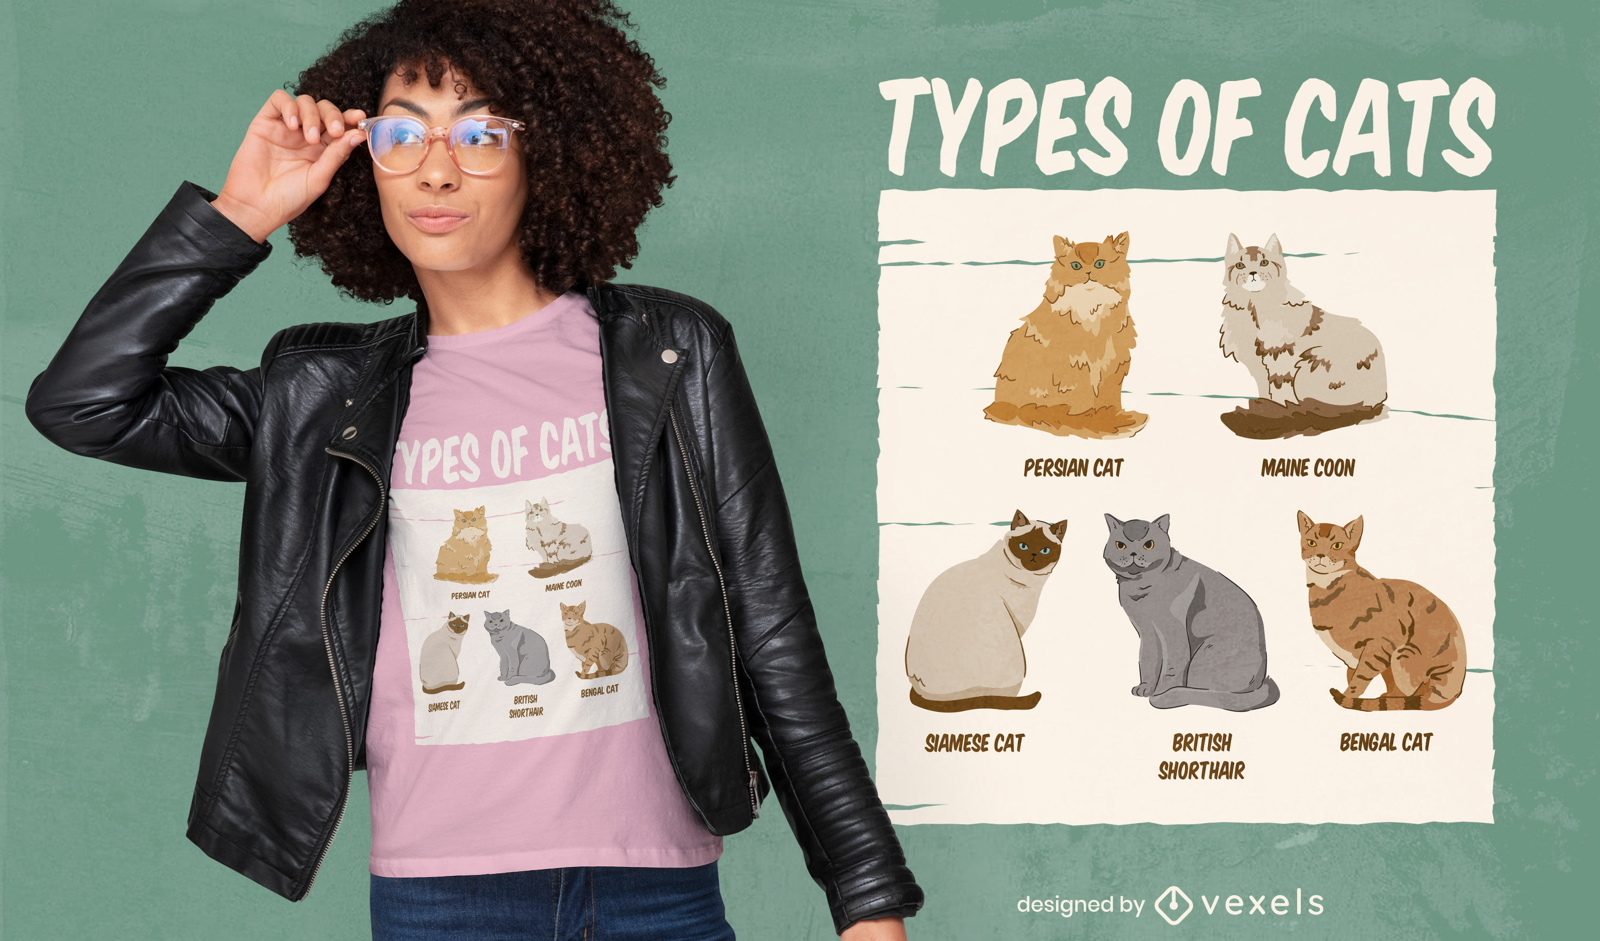 Types of cats t-shirt design